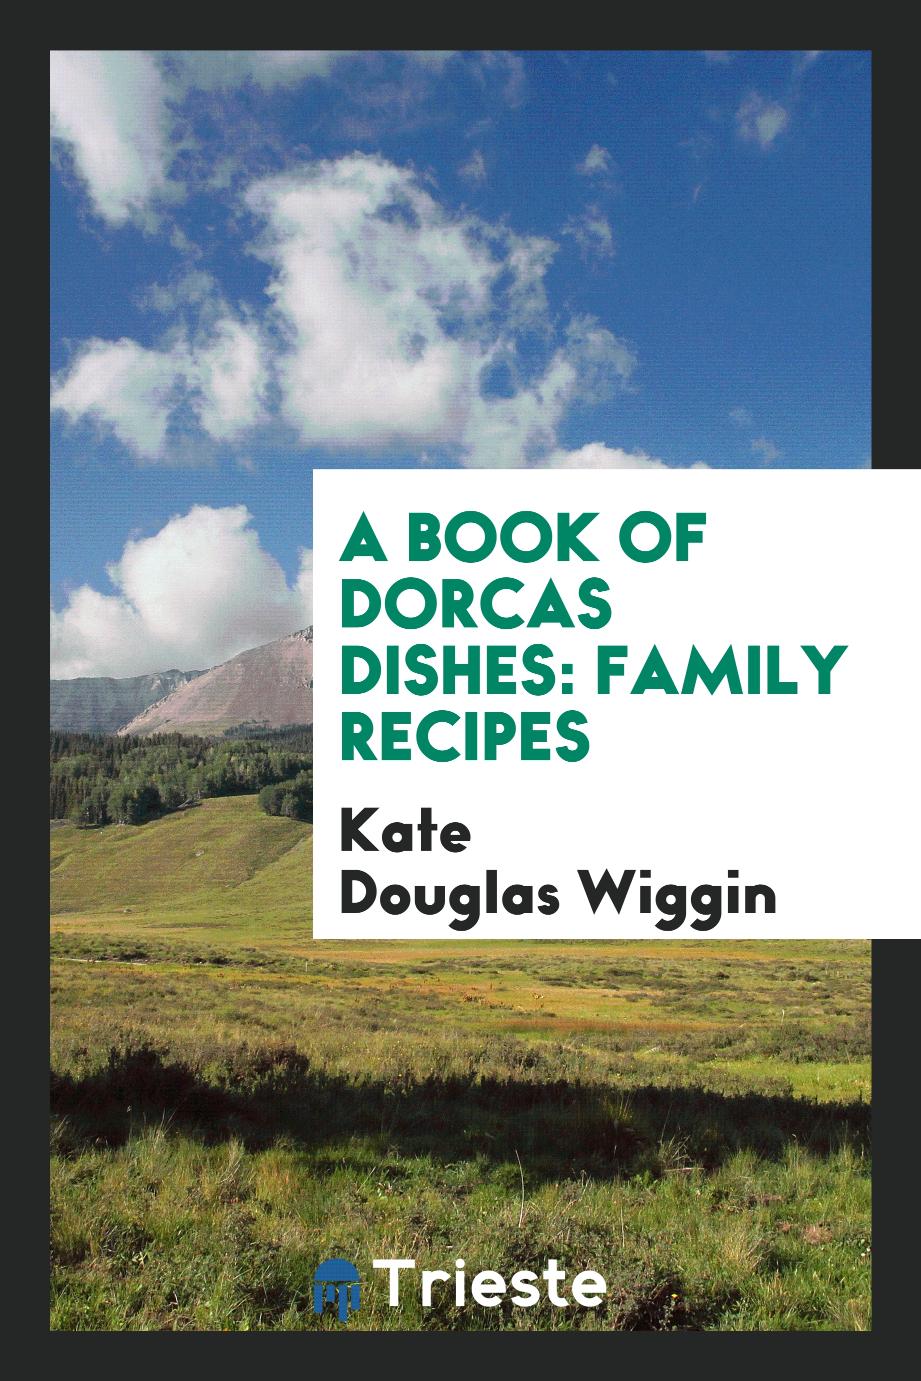 A Book of Dorcas Dishes: Family Recipes